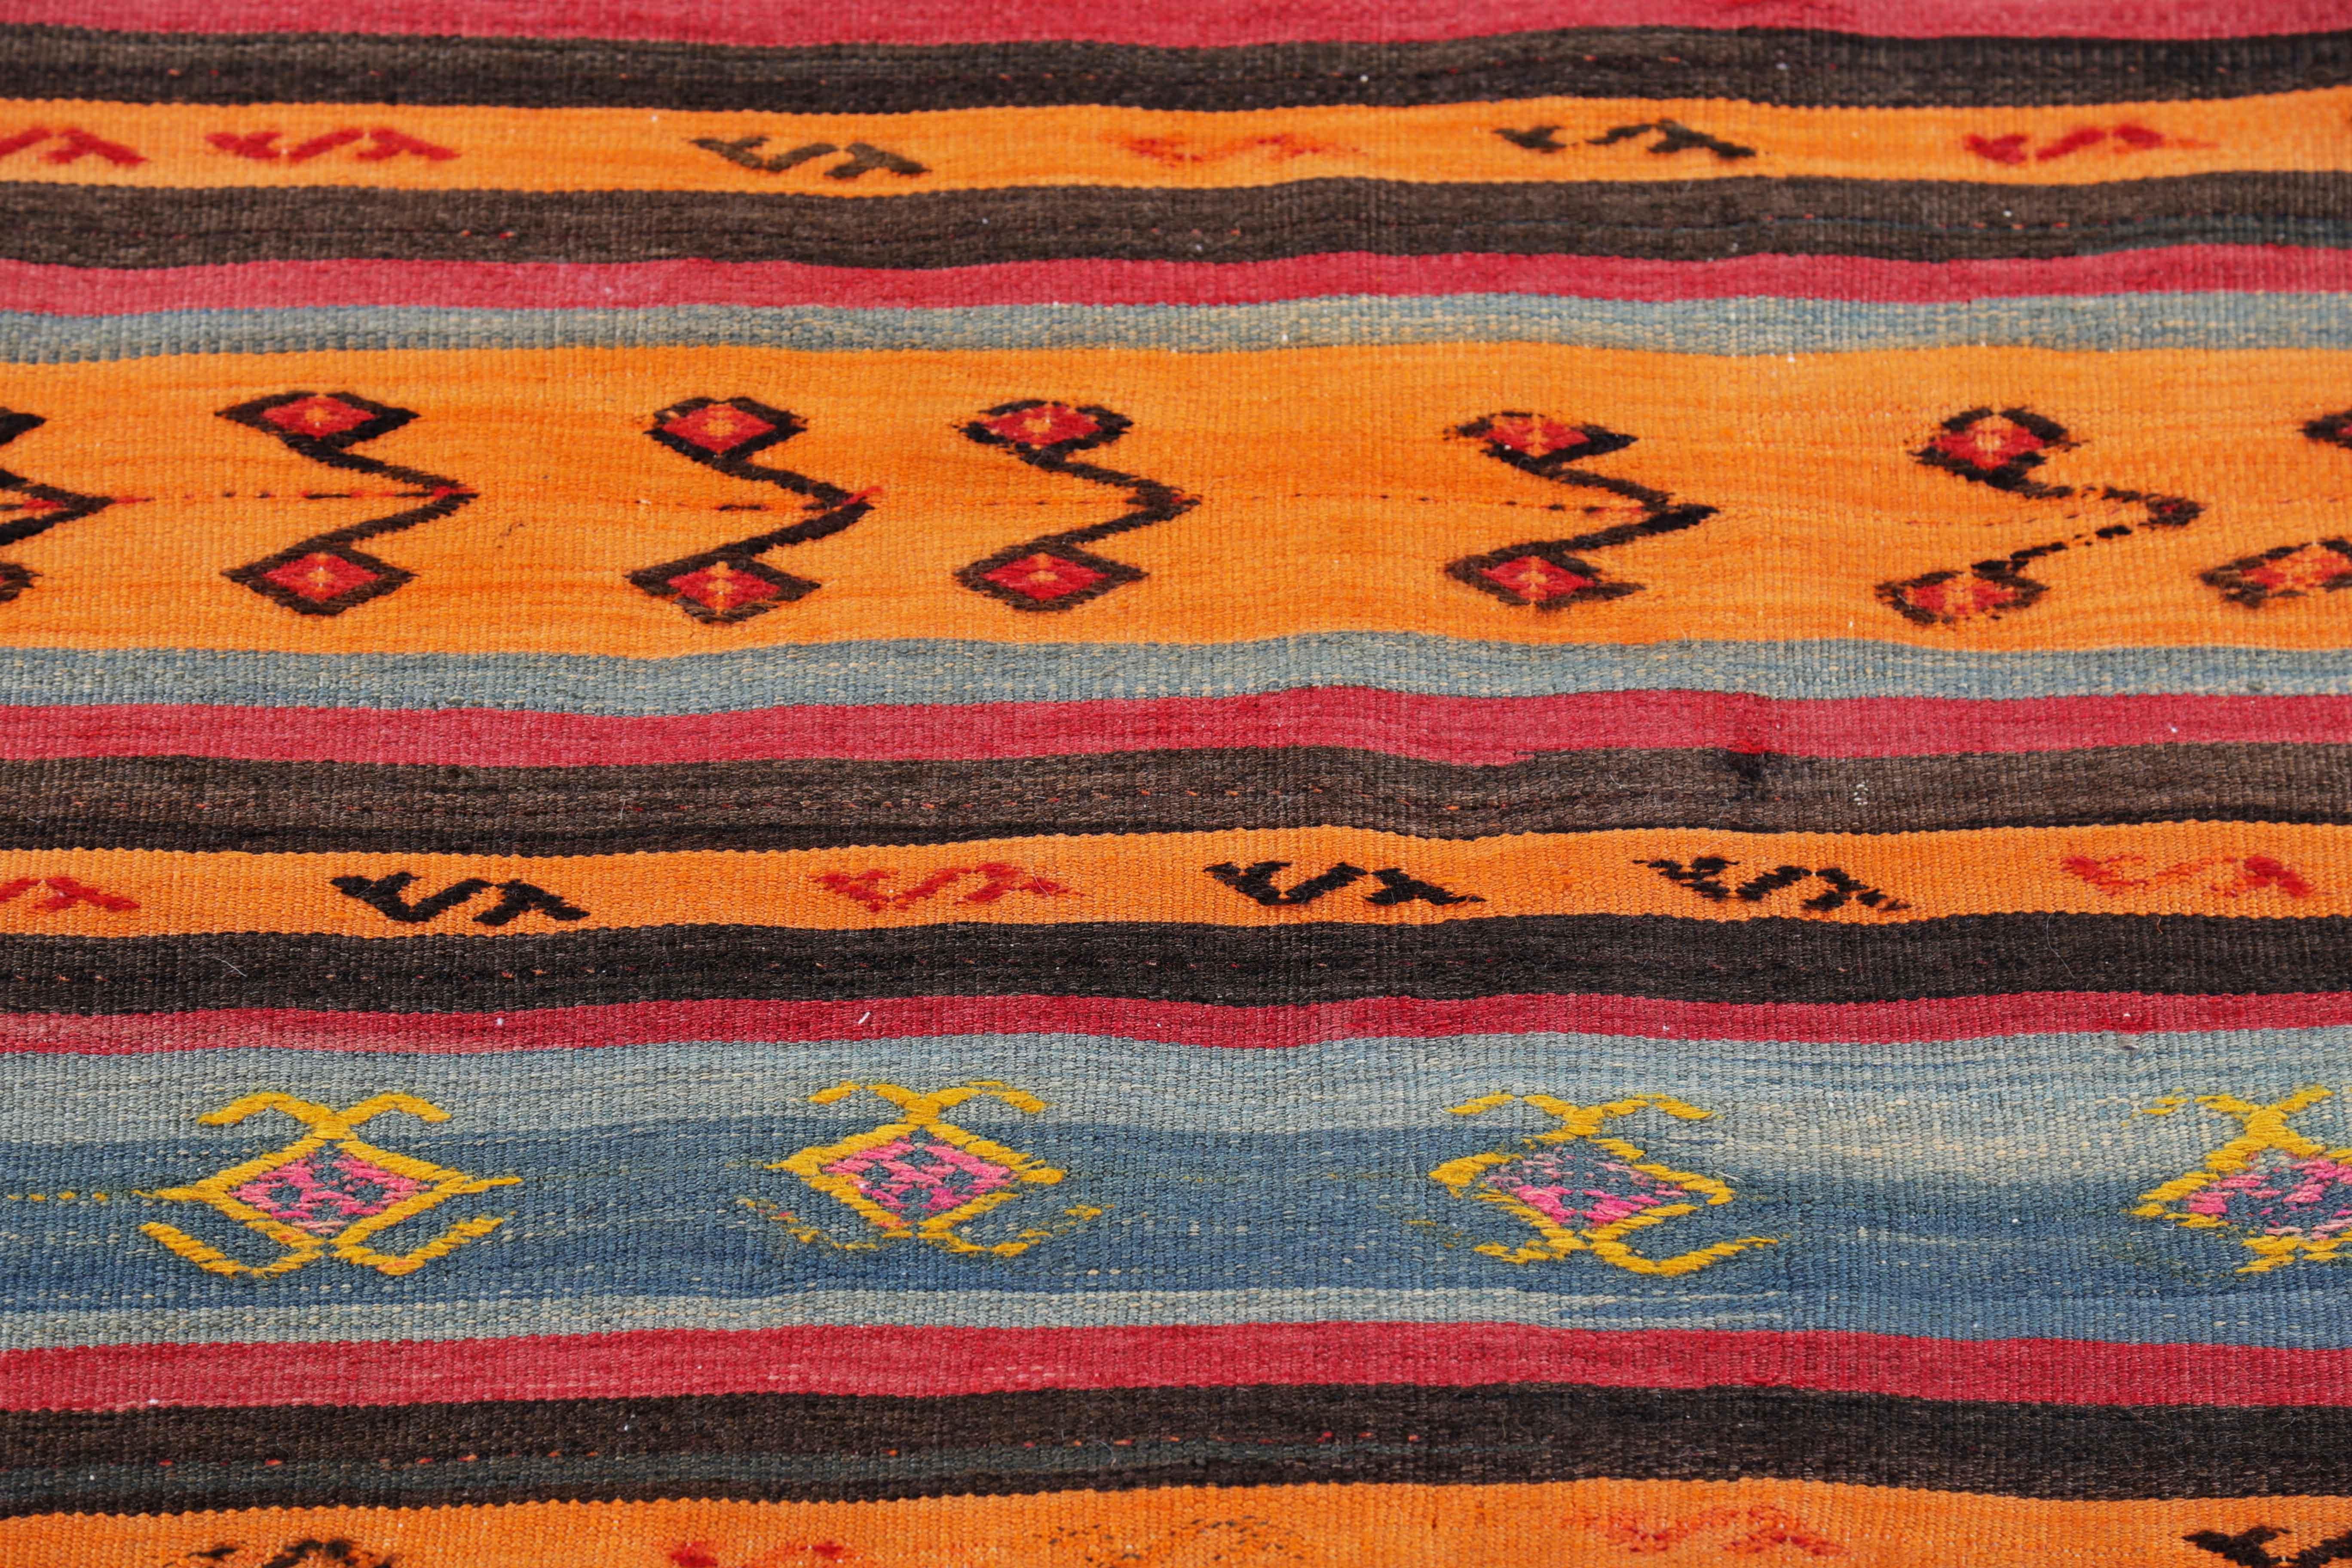 Hand-Woven Antique Persian Square Rug Kilim Design For Sale